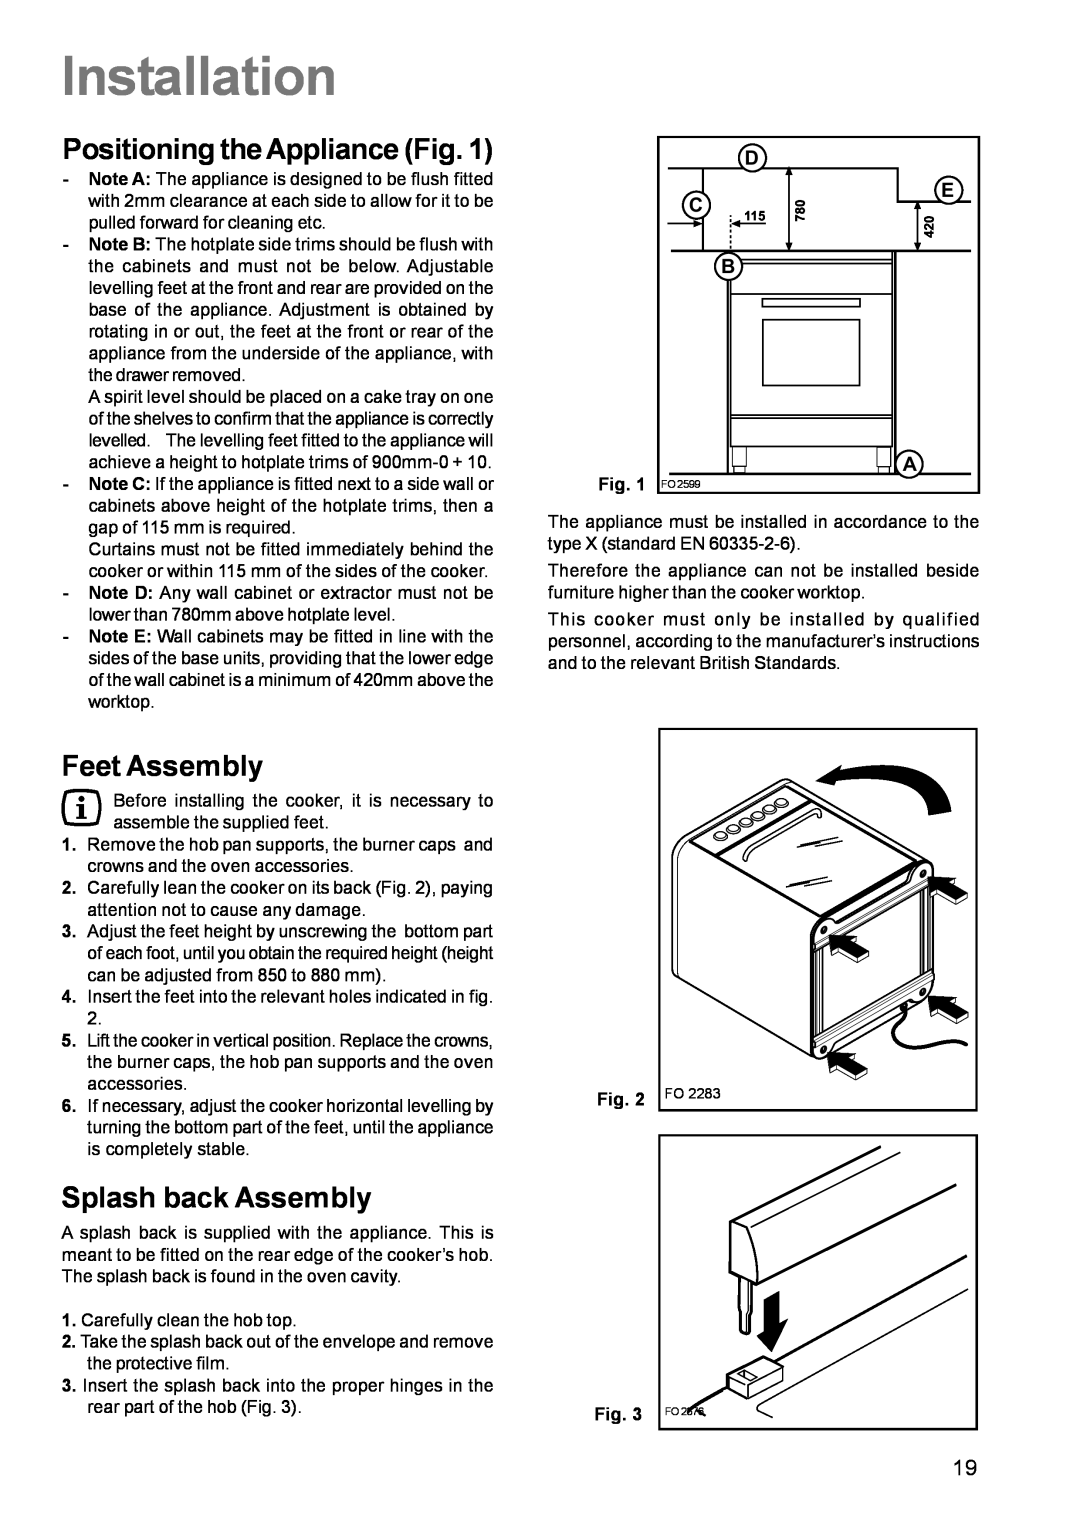 Parkinson Cowan CSIM 509 manual Installation, Positioning the Appliance Fig, Feet Assembly, Splash back Assembly 